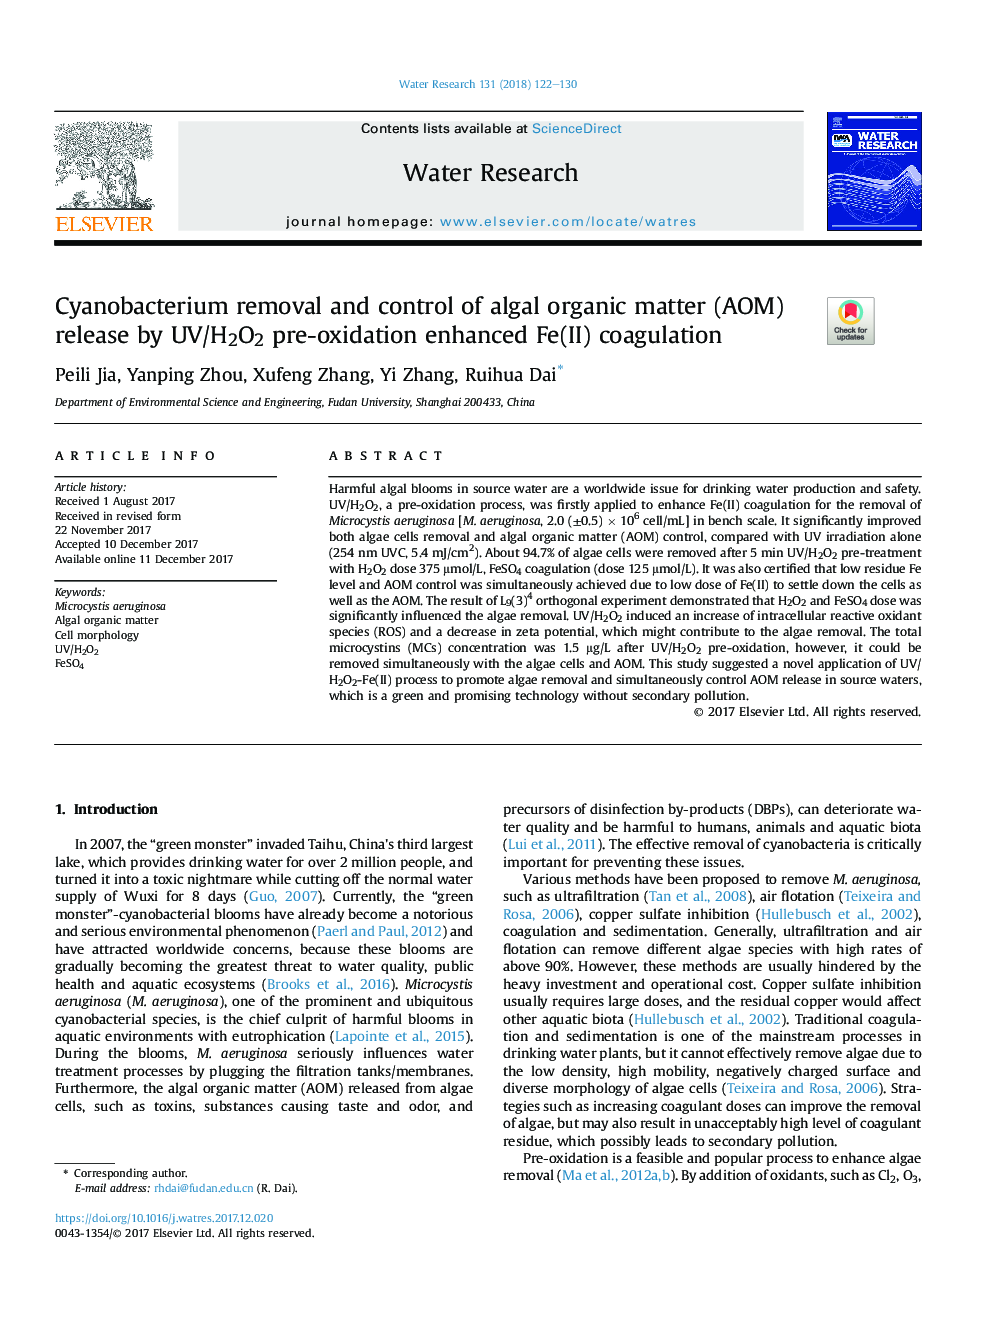 Cyanobacterium removal and control of algal organic matter (AOM) release by UV/H2O2 pre-oxidation enhanced Fe(II) coagulation